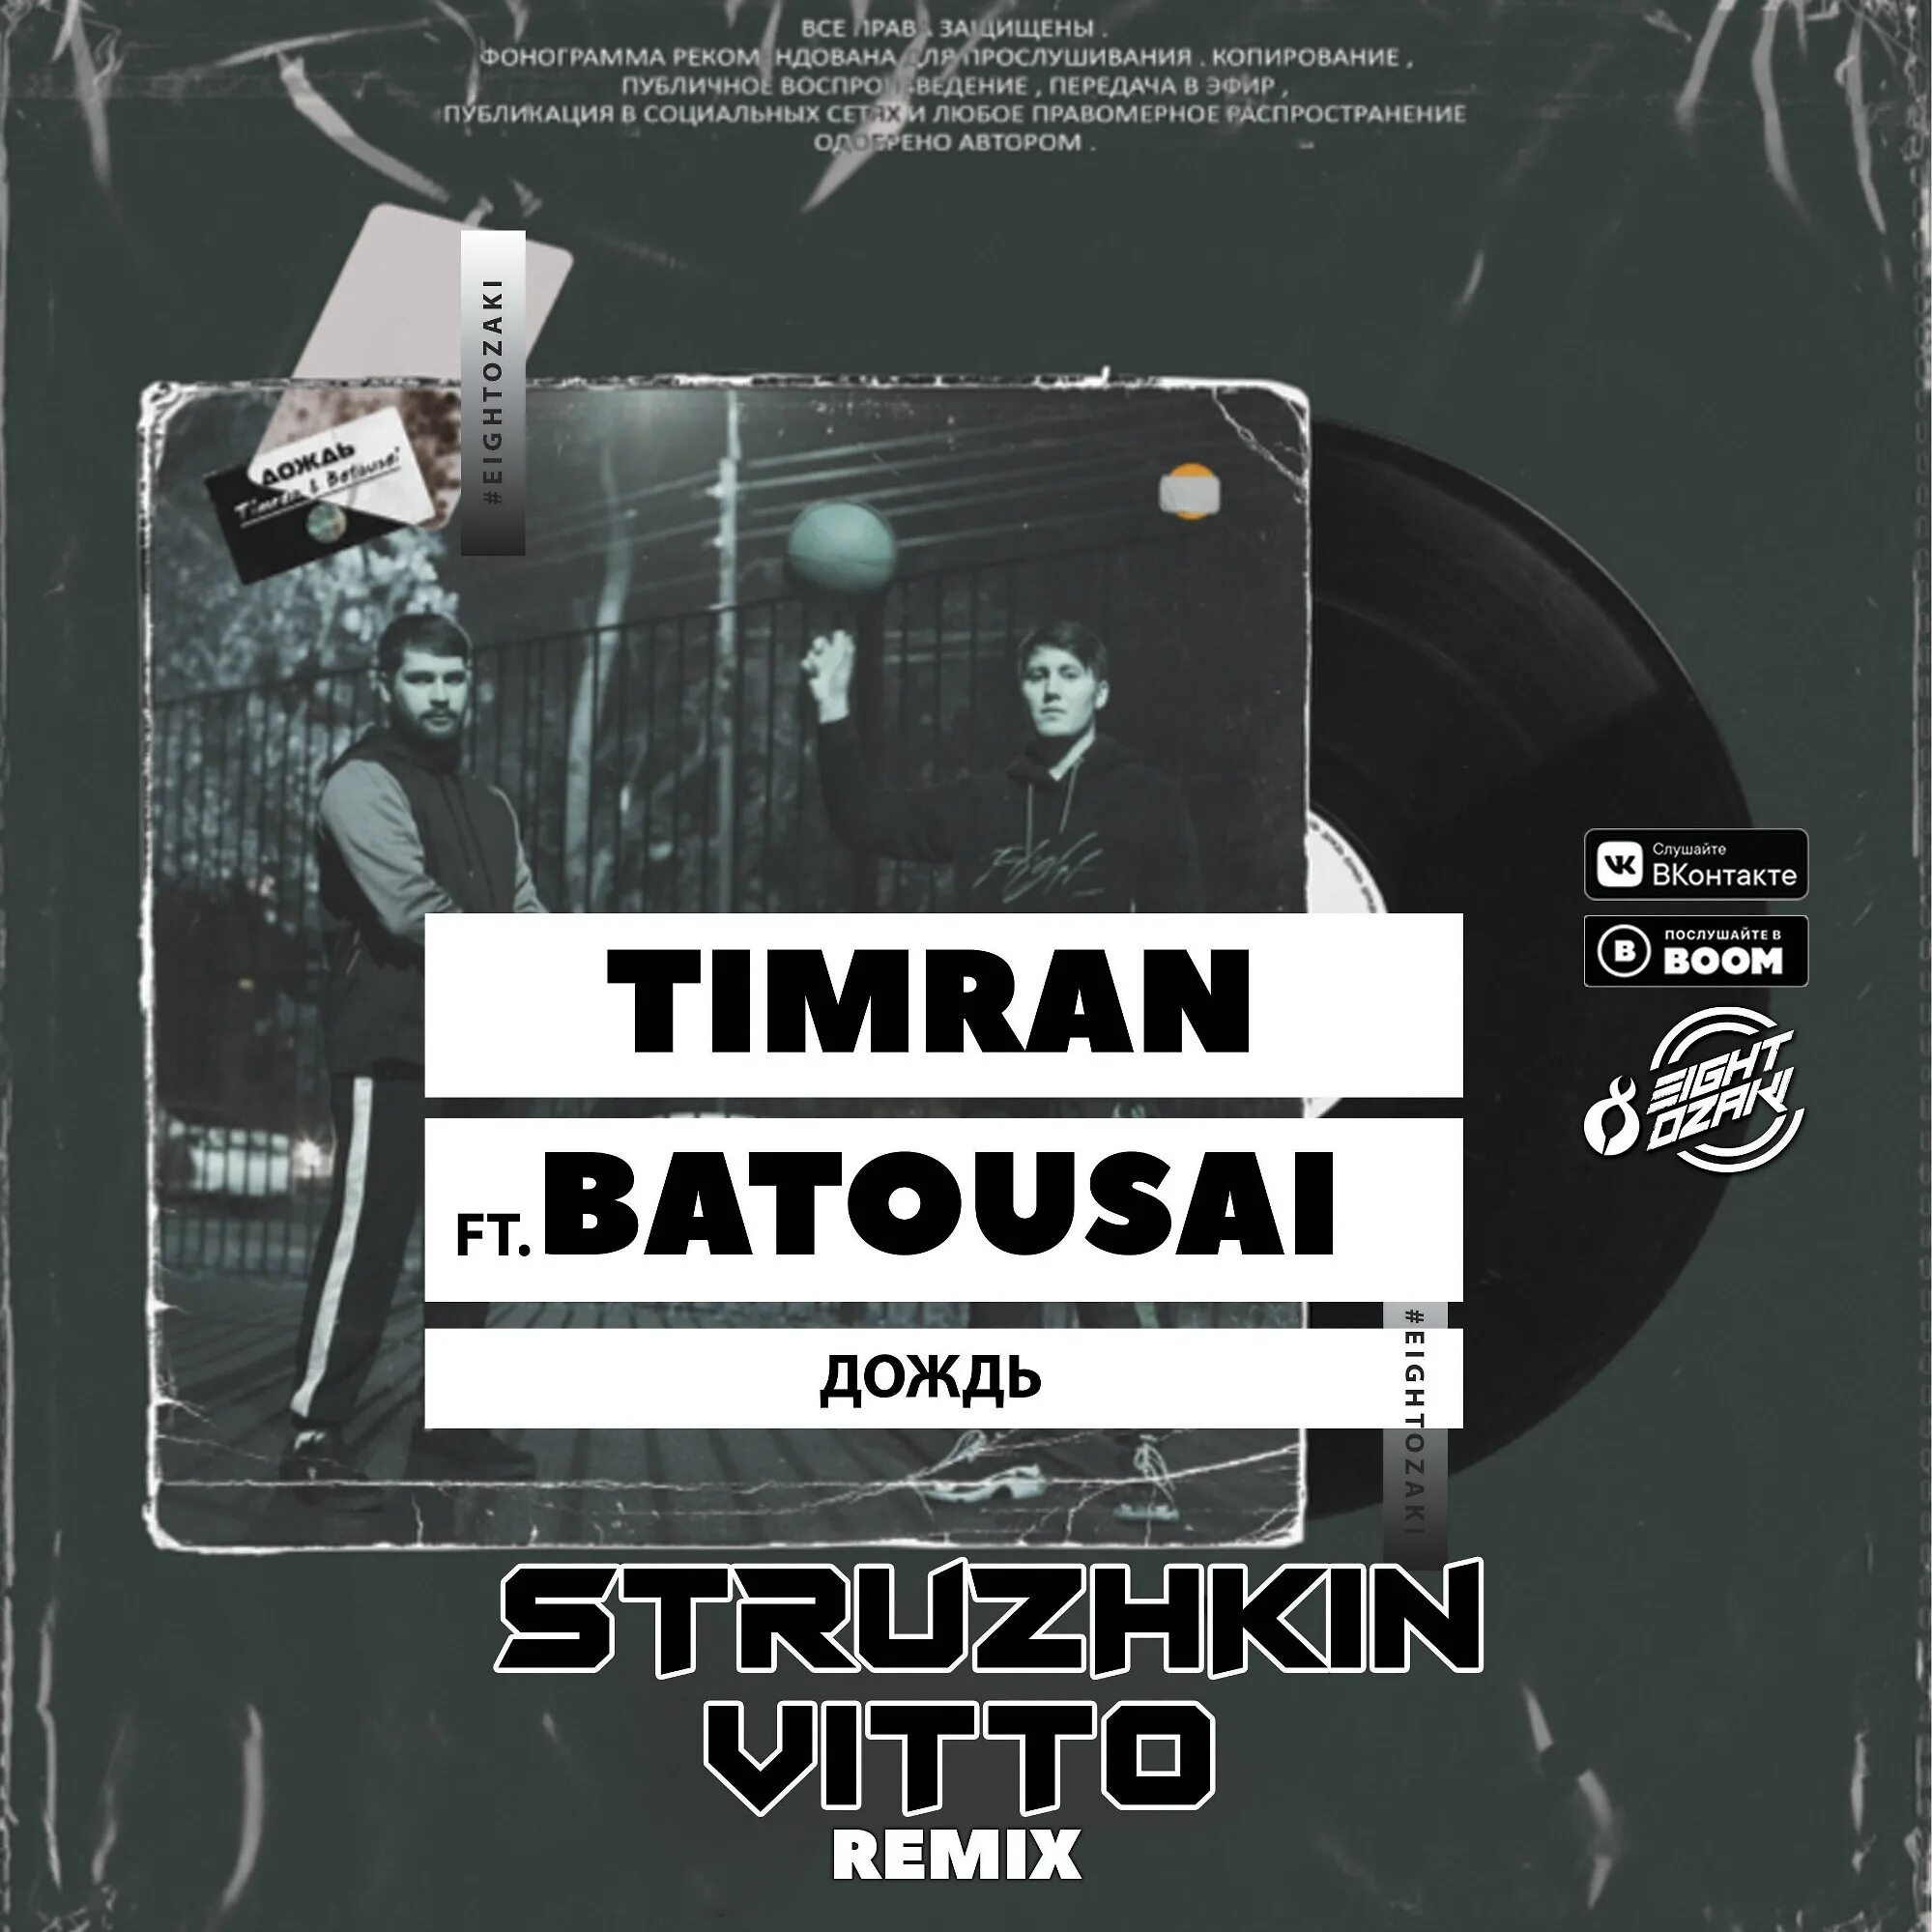 Timran feat. Timran, batousai. Timran ft. Batousai дождь. Timran batousai музыка. Timran feat. Batousai - музыка.